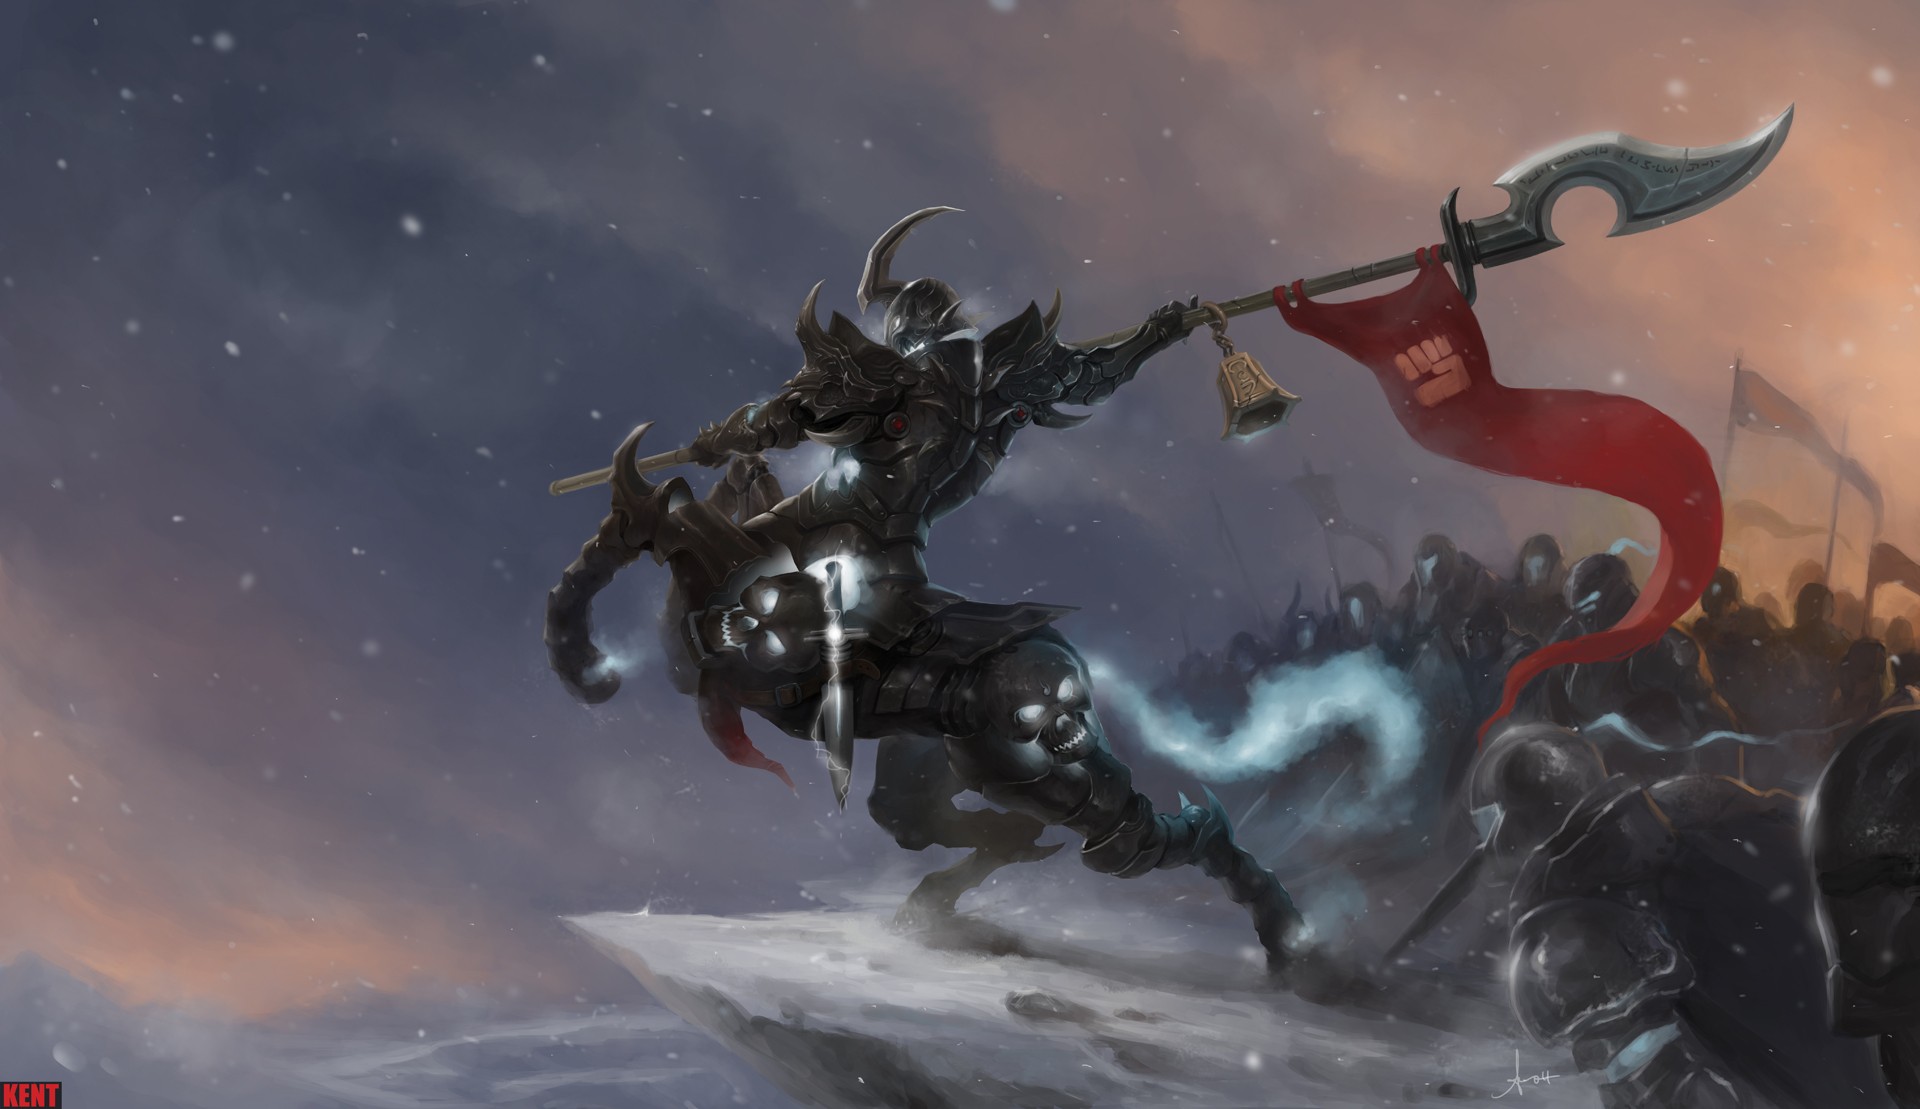 General 1920x1109 war horns Centaurs warrior skull flag League of Legends DeviantArt fantasy art PC gaming